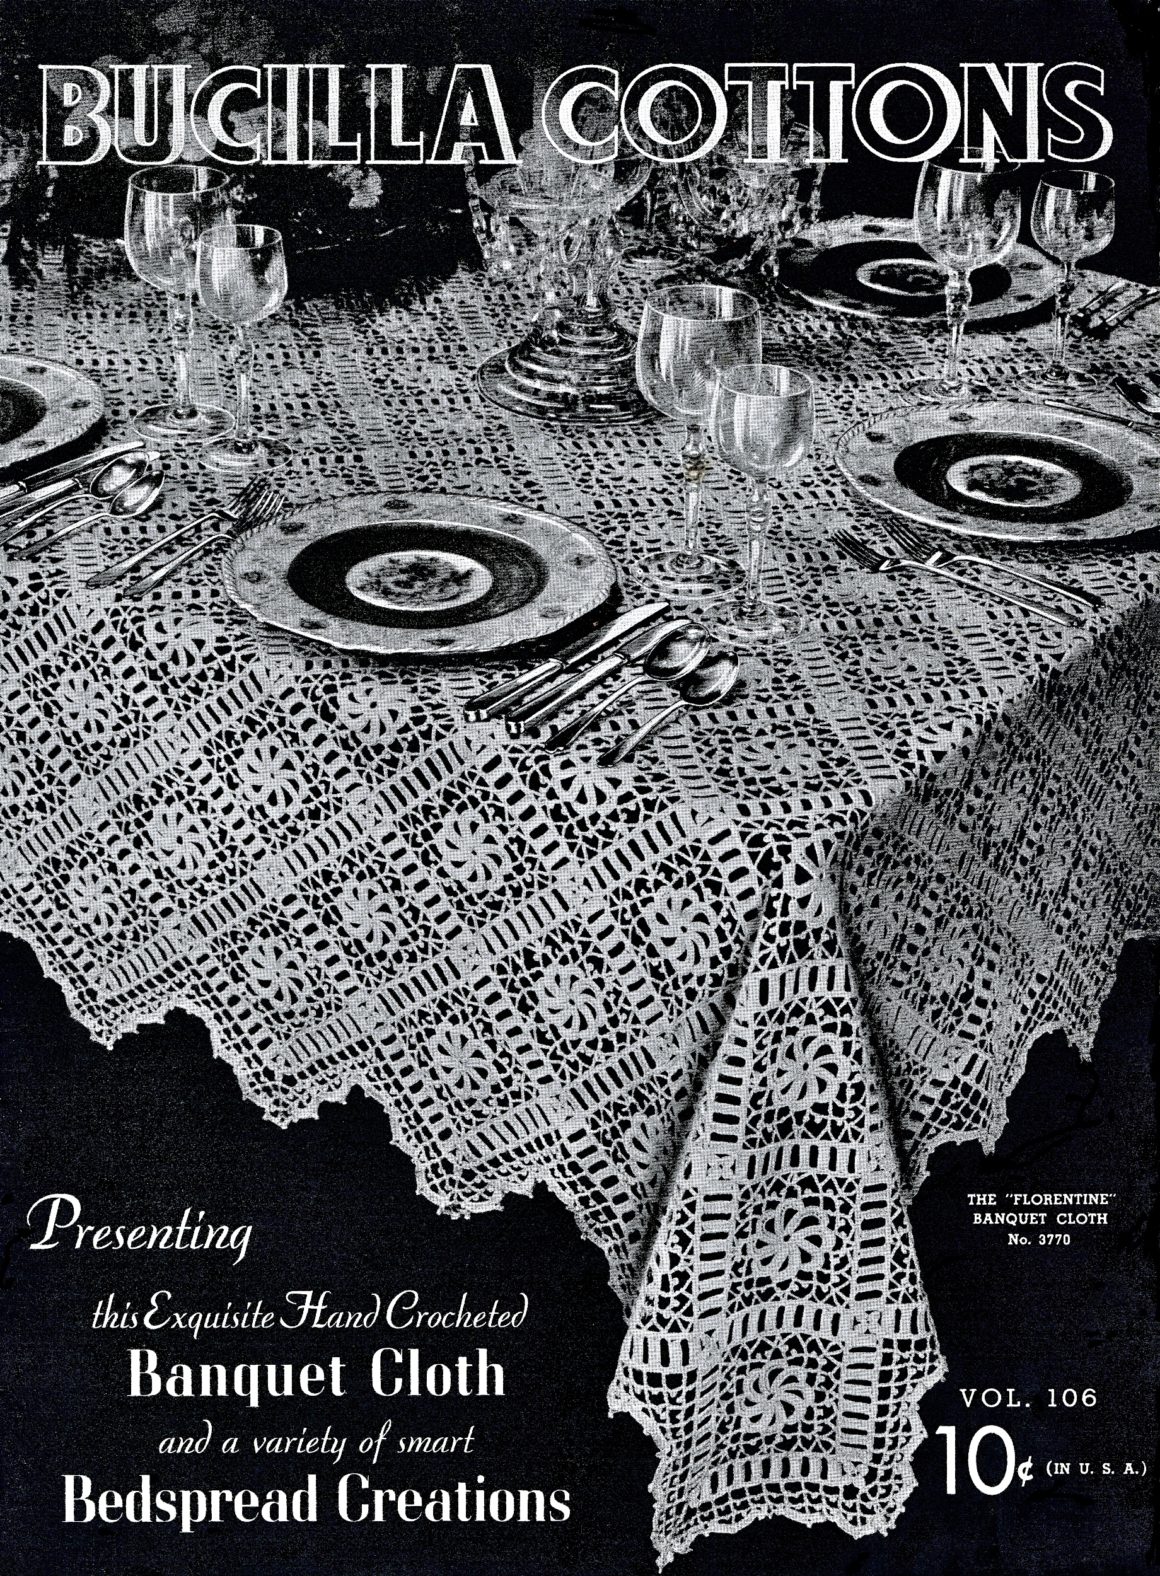 Nineteen Thirties Bedspread Tablecloth Napkins Crochet Lace Motifs Nineteen Thirties Bedspread Tablecloth Napkins Crochet Lace Motifs Bucilla No. 106